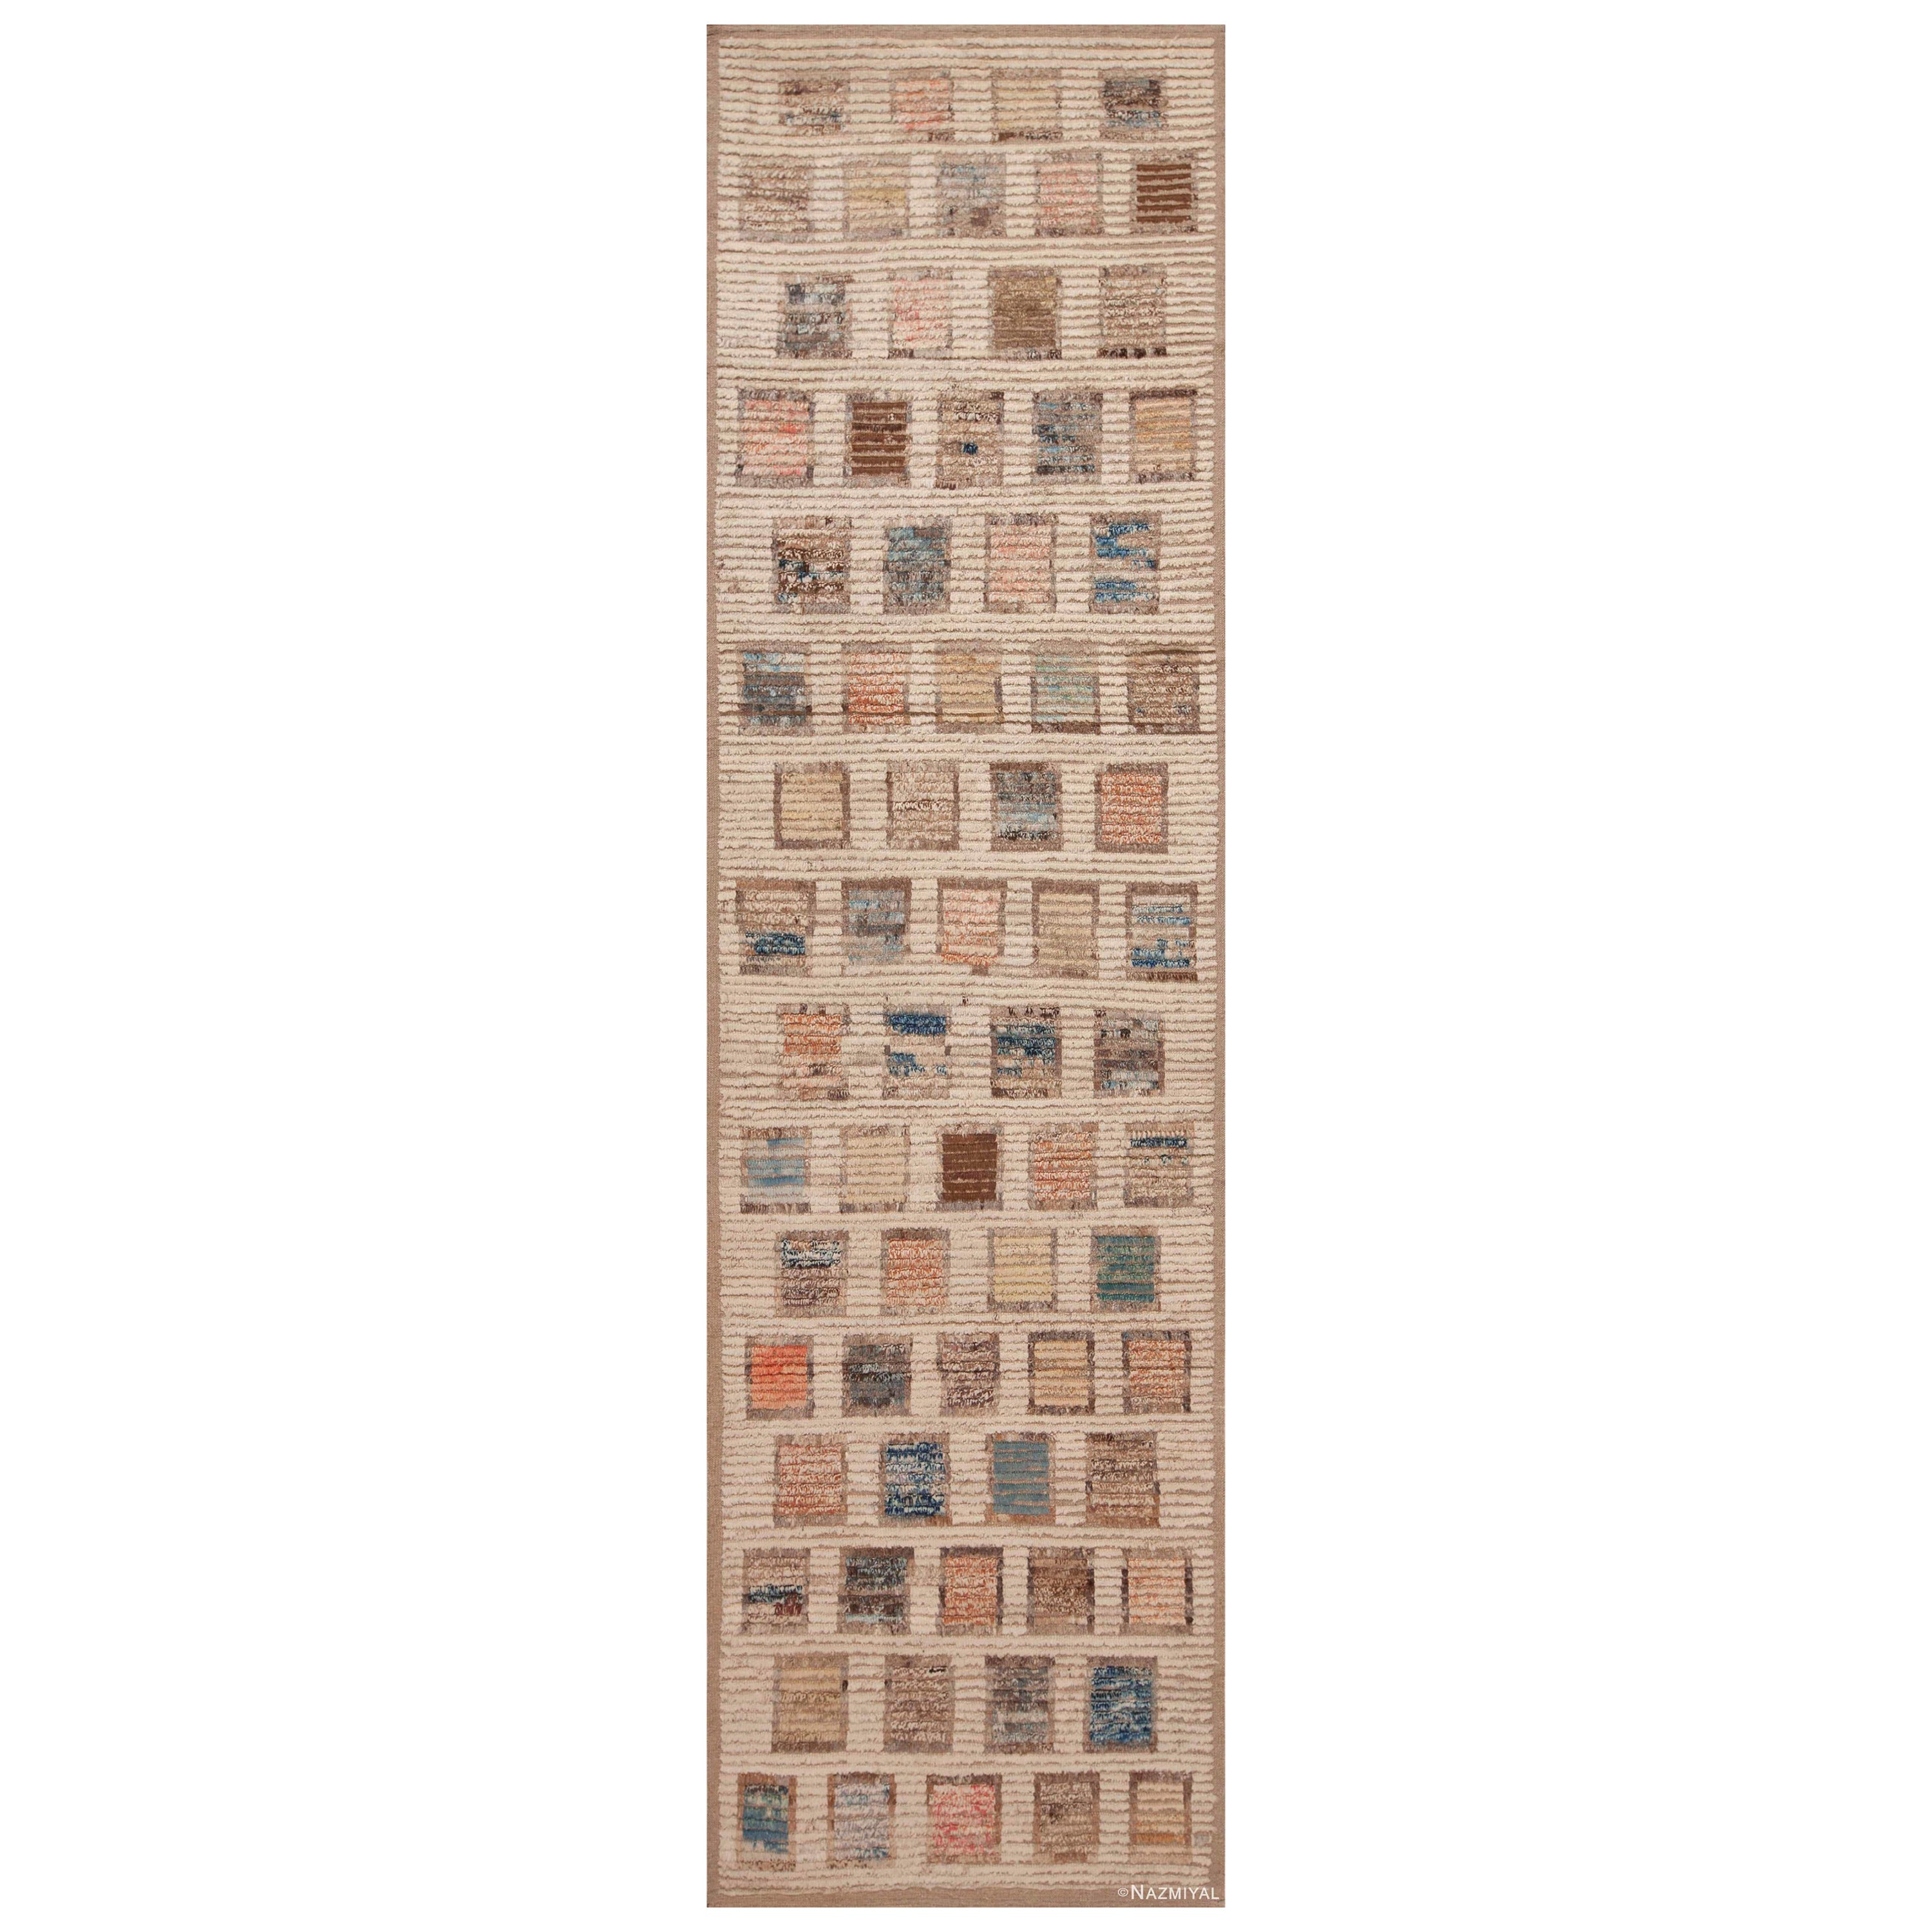 Nazmiyal Collection Artsy Modern Geometric Hallway Runner Rug 3'6" x 12'9" For Sale